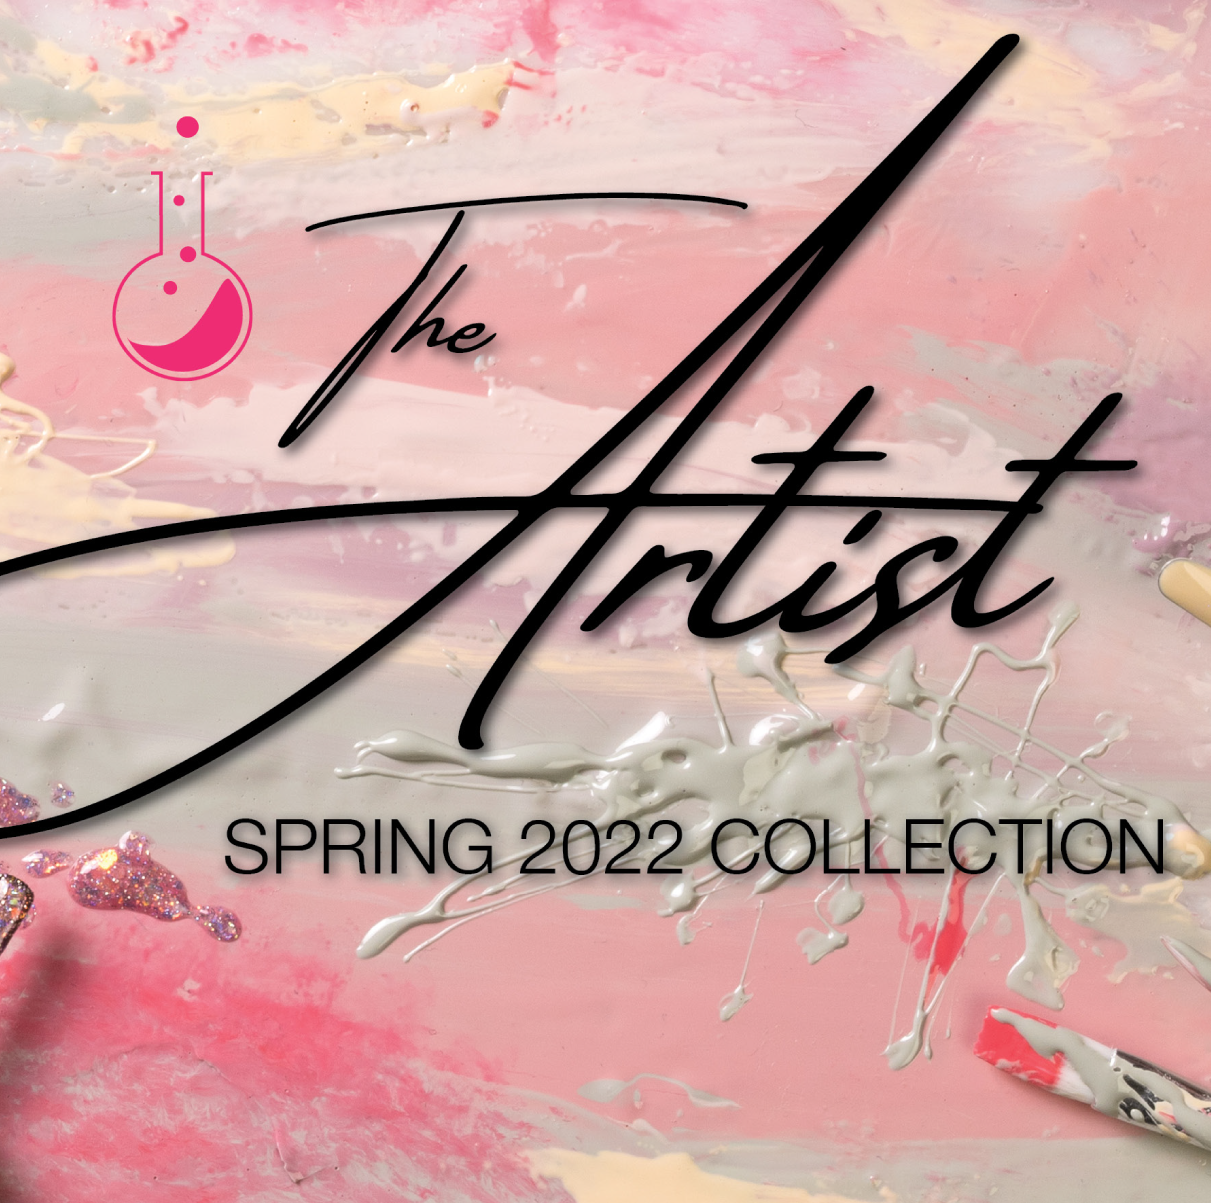 Light Elegance Spring 2022 Collection - The Artist